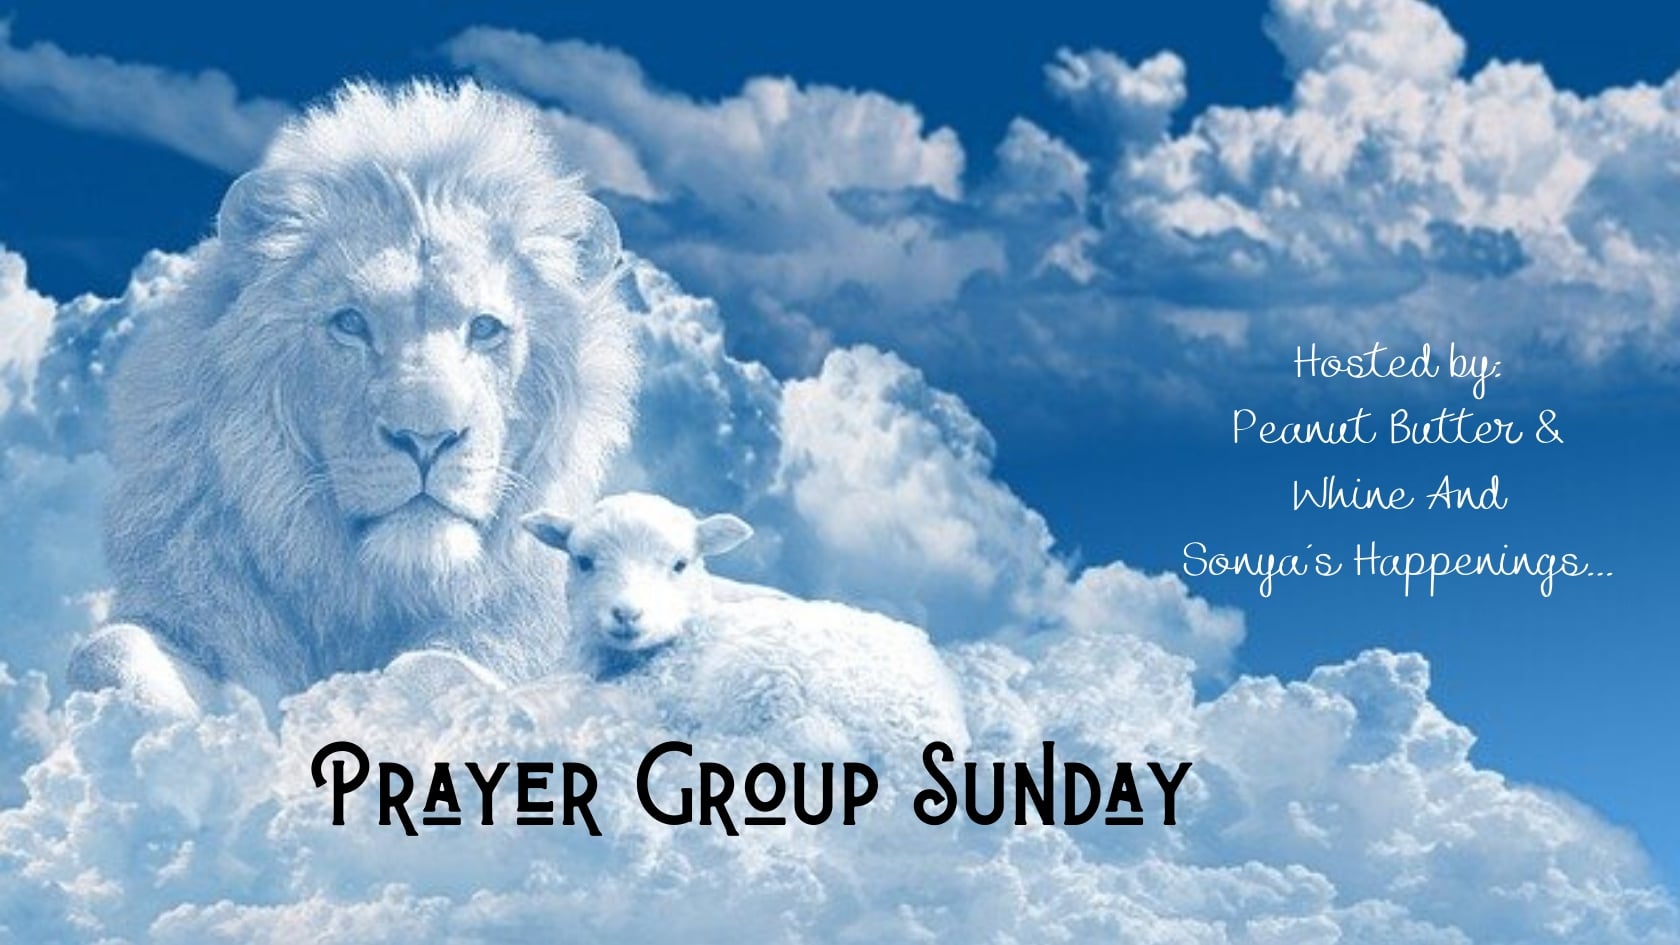 Prayer Group Sunday, Prayer requests, Prayer